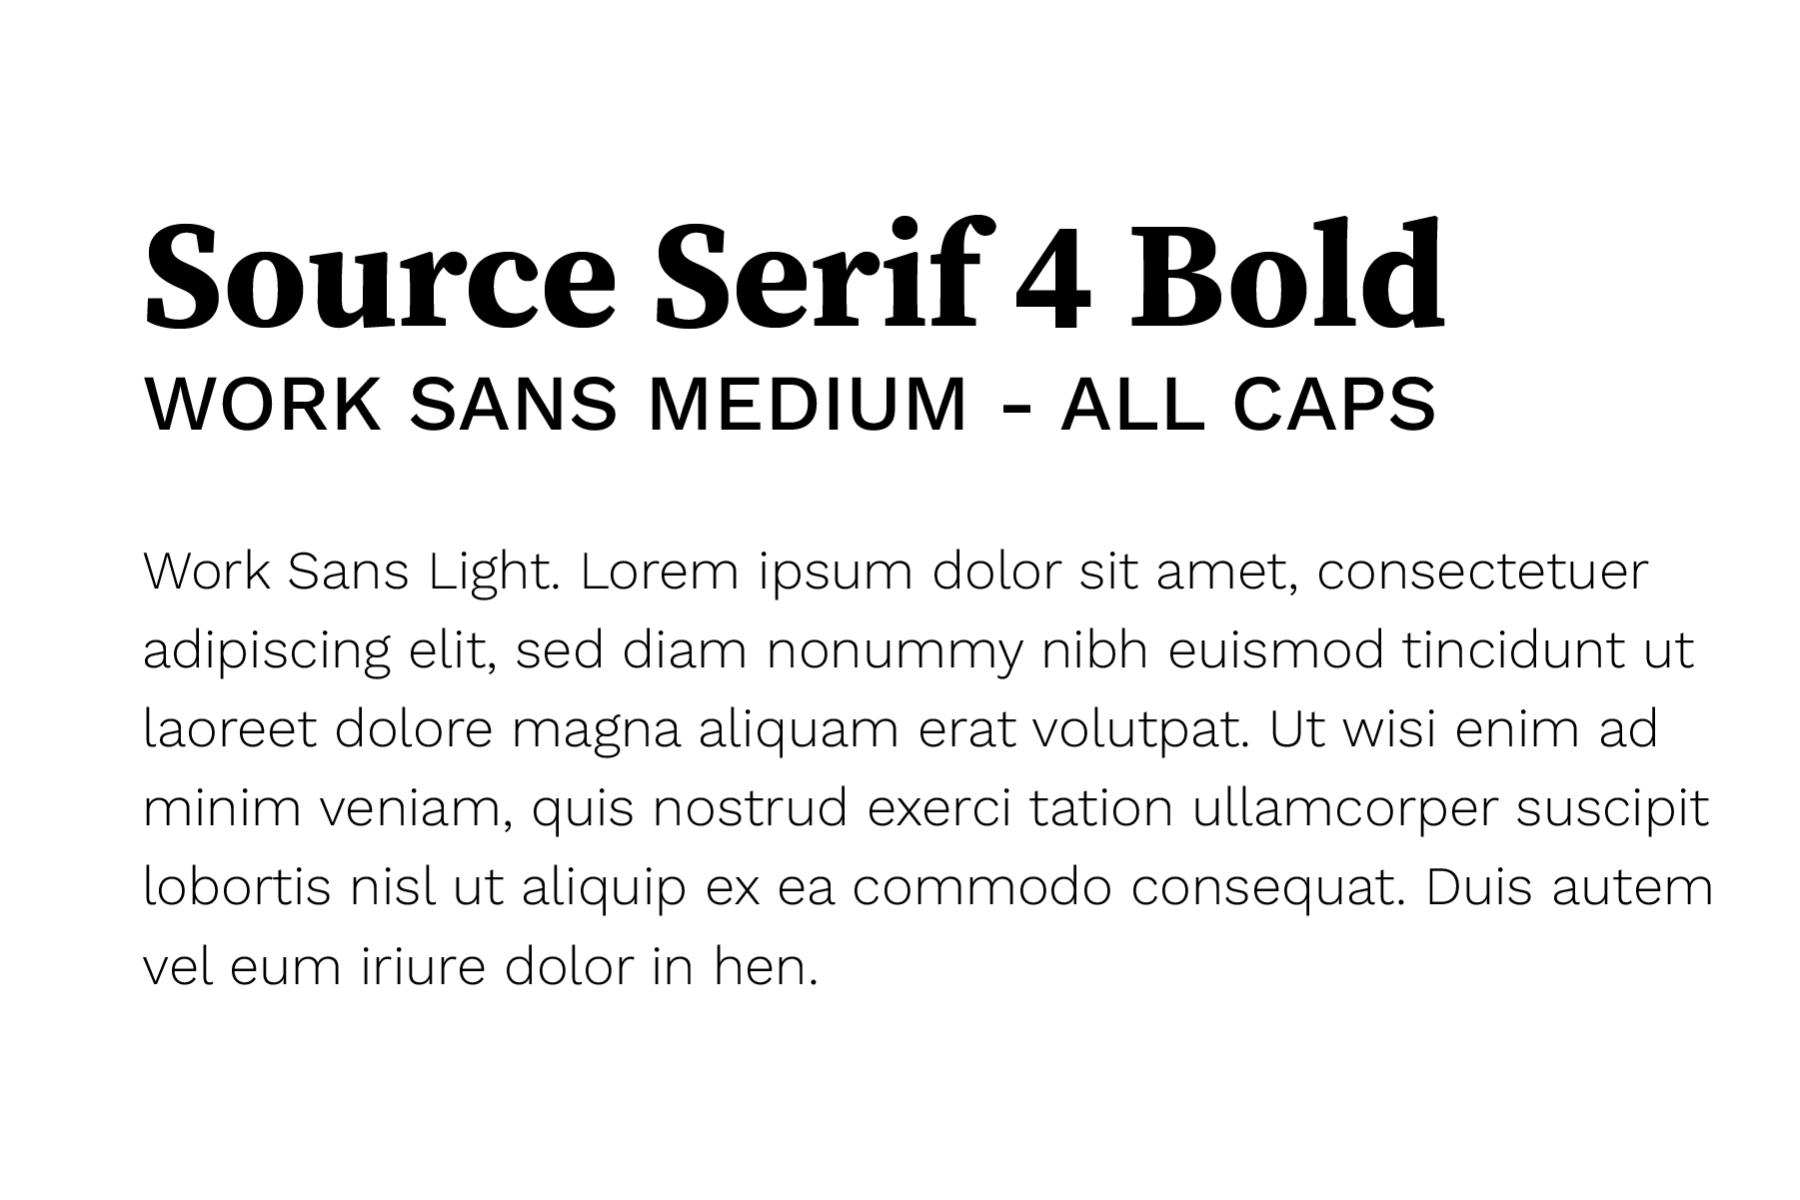 Typeface example showing Source Serif headline, Work Sans subhead, and Work Sans body copy